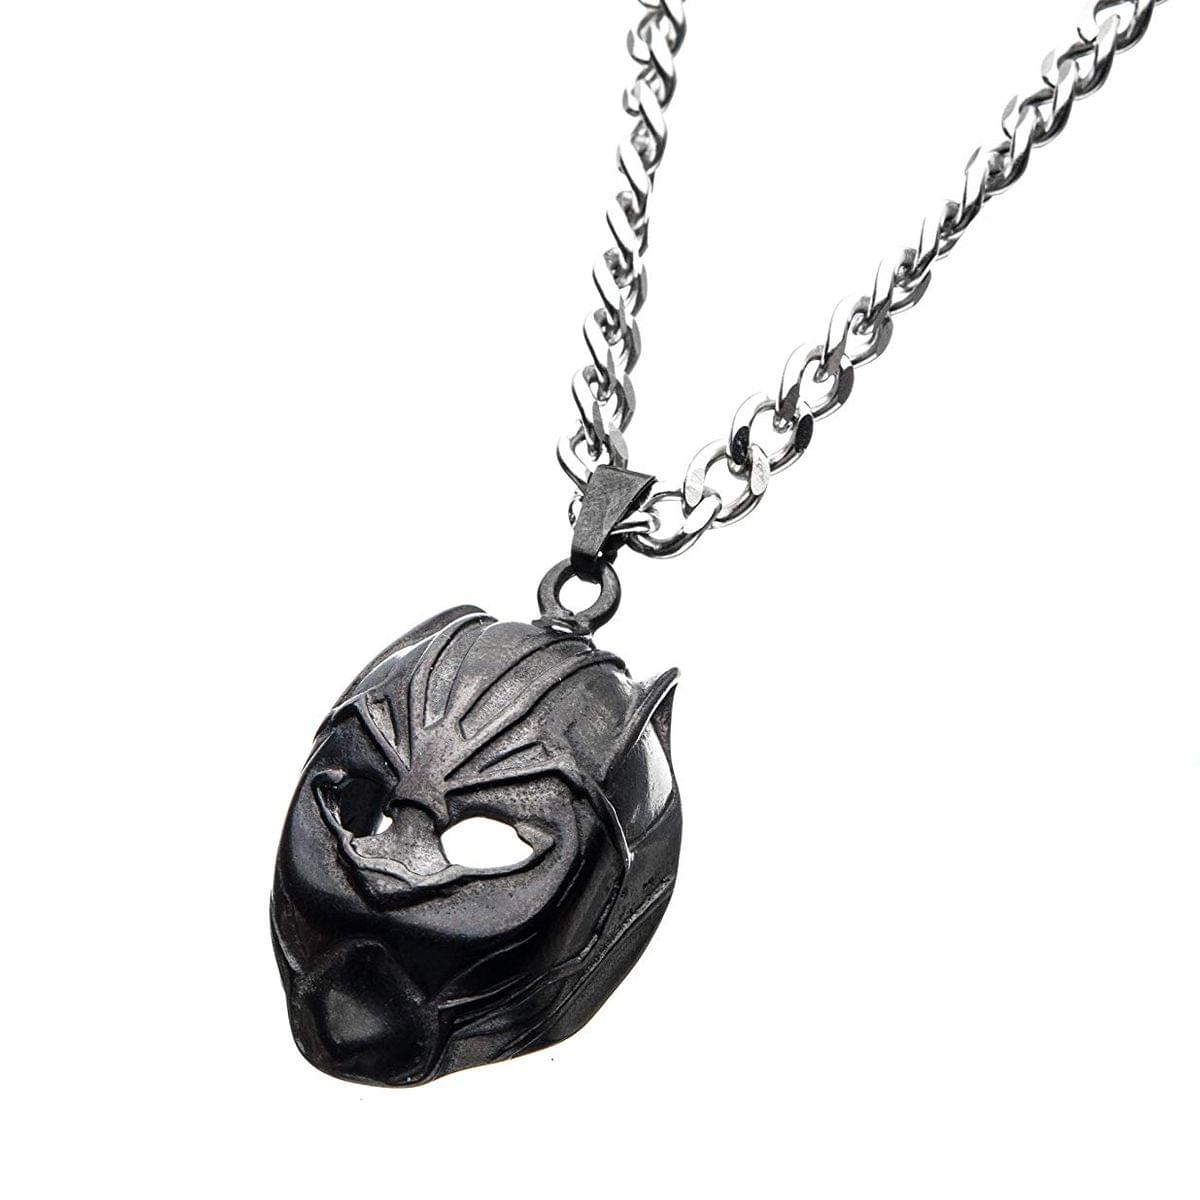 Marvel Black Panther Mask 3D Pendant Necklace